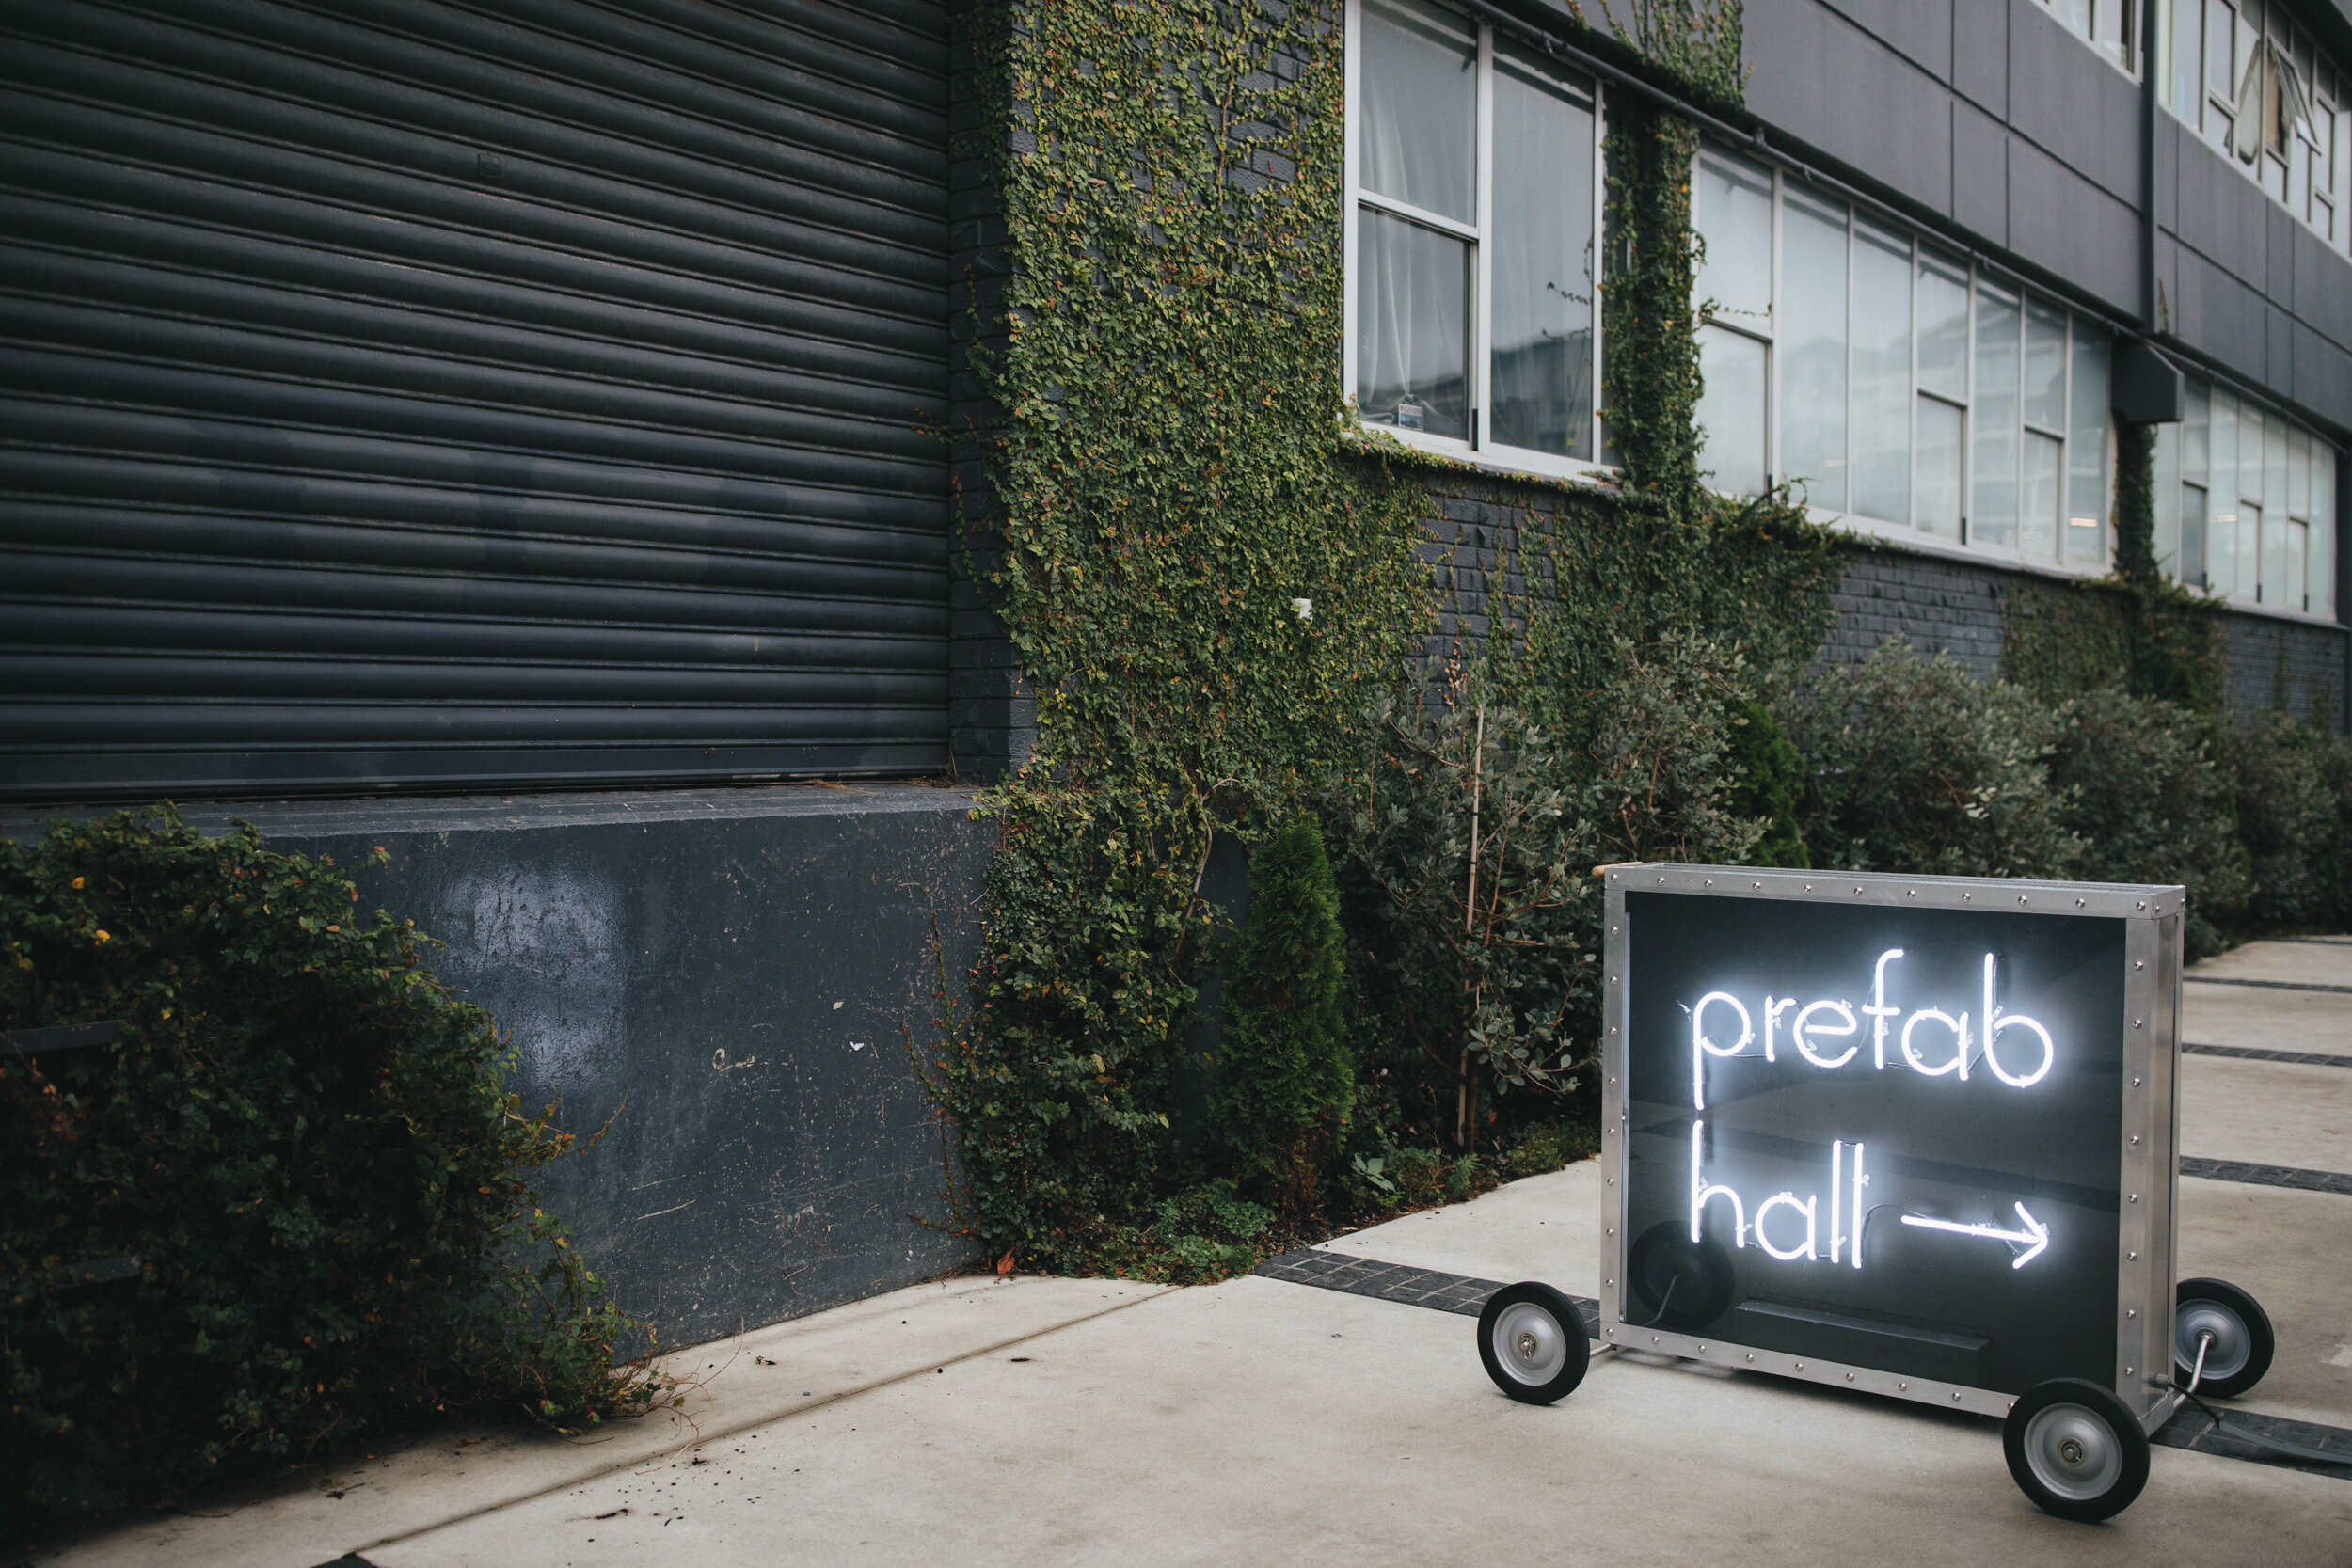 Prefab Hall wedding venue review